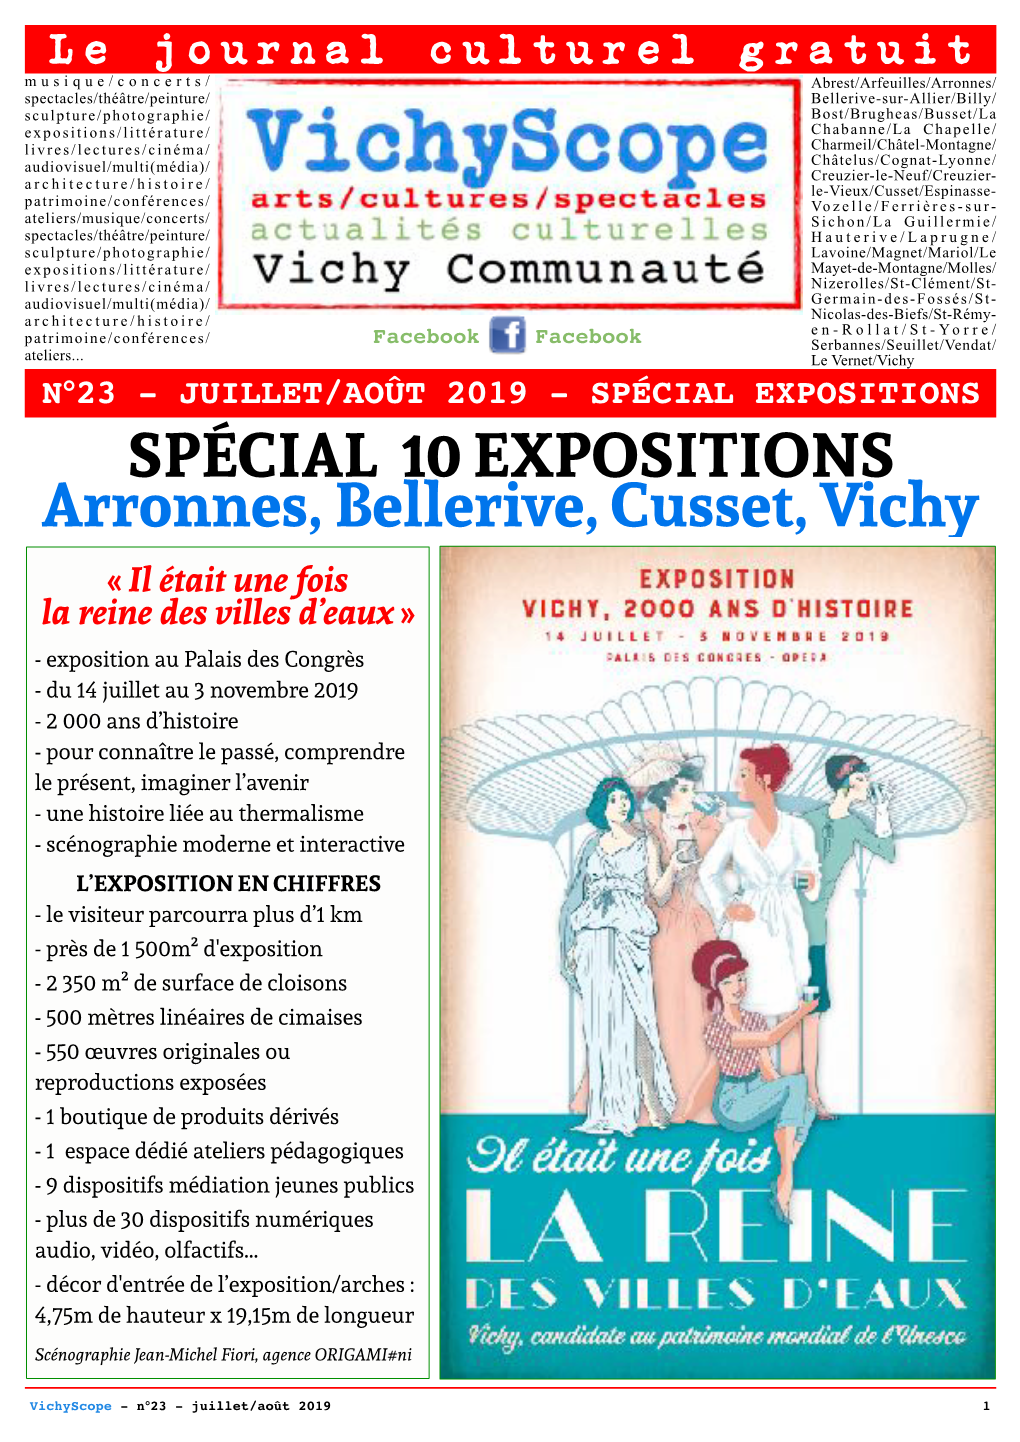 Vichyscope23 JUIL AOÛ 19